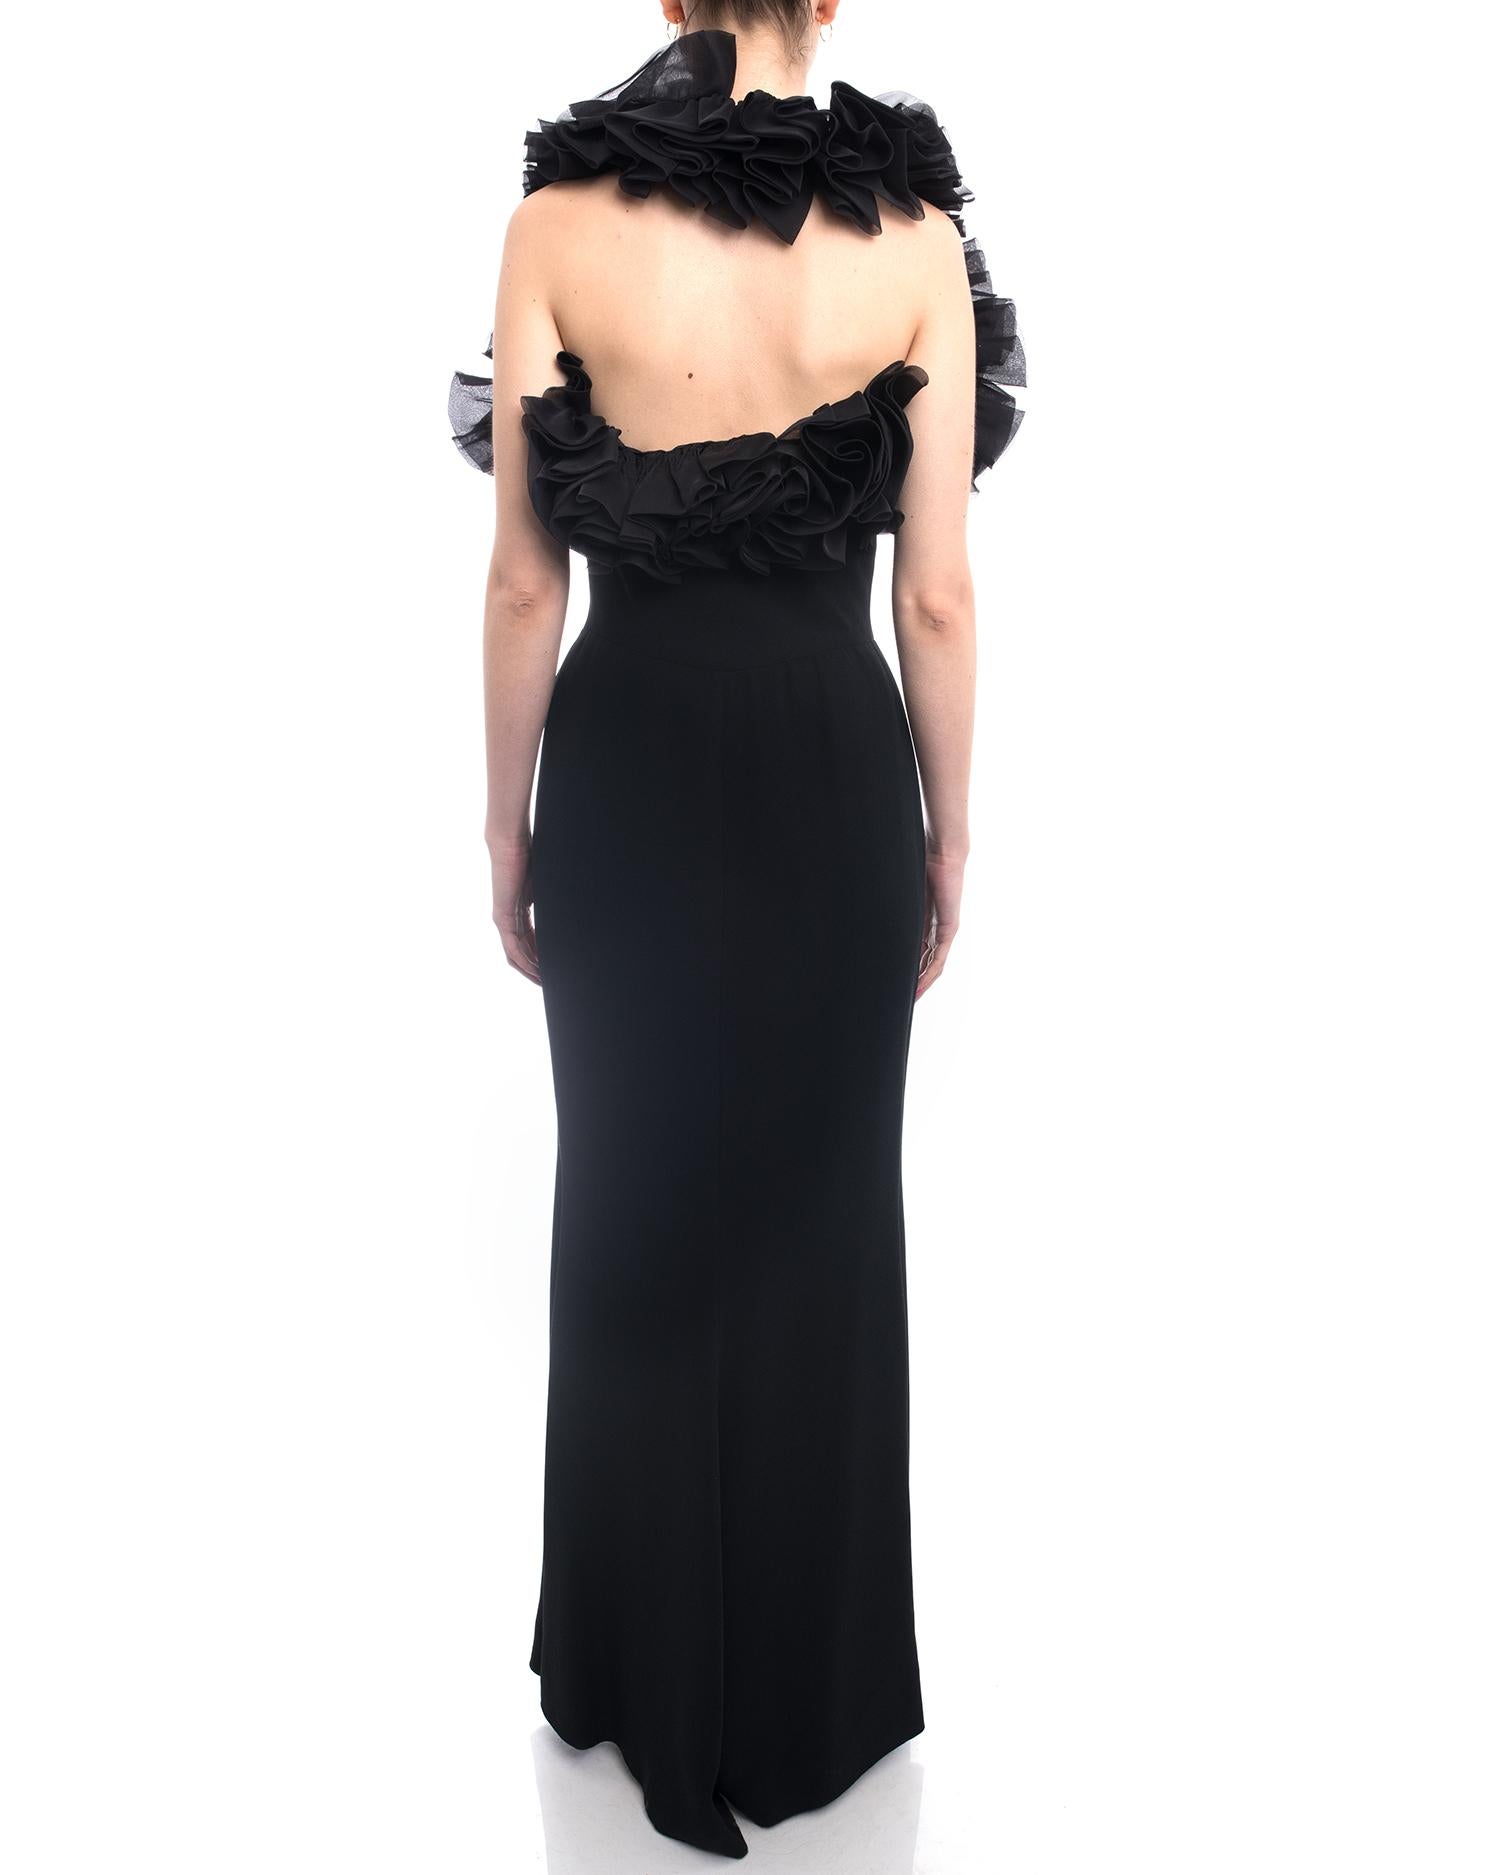 Yves Saint Laurent Haute Couture Vintage 1990’s Black Ruffle Evening Gown For Sale 3